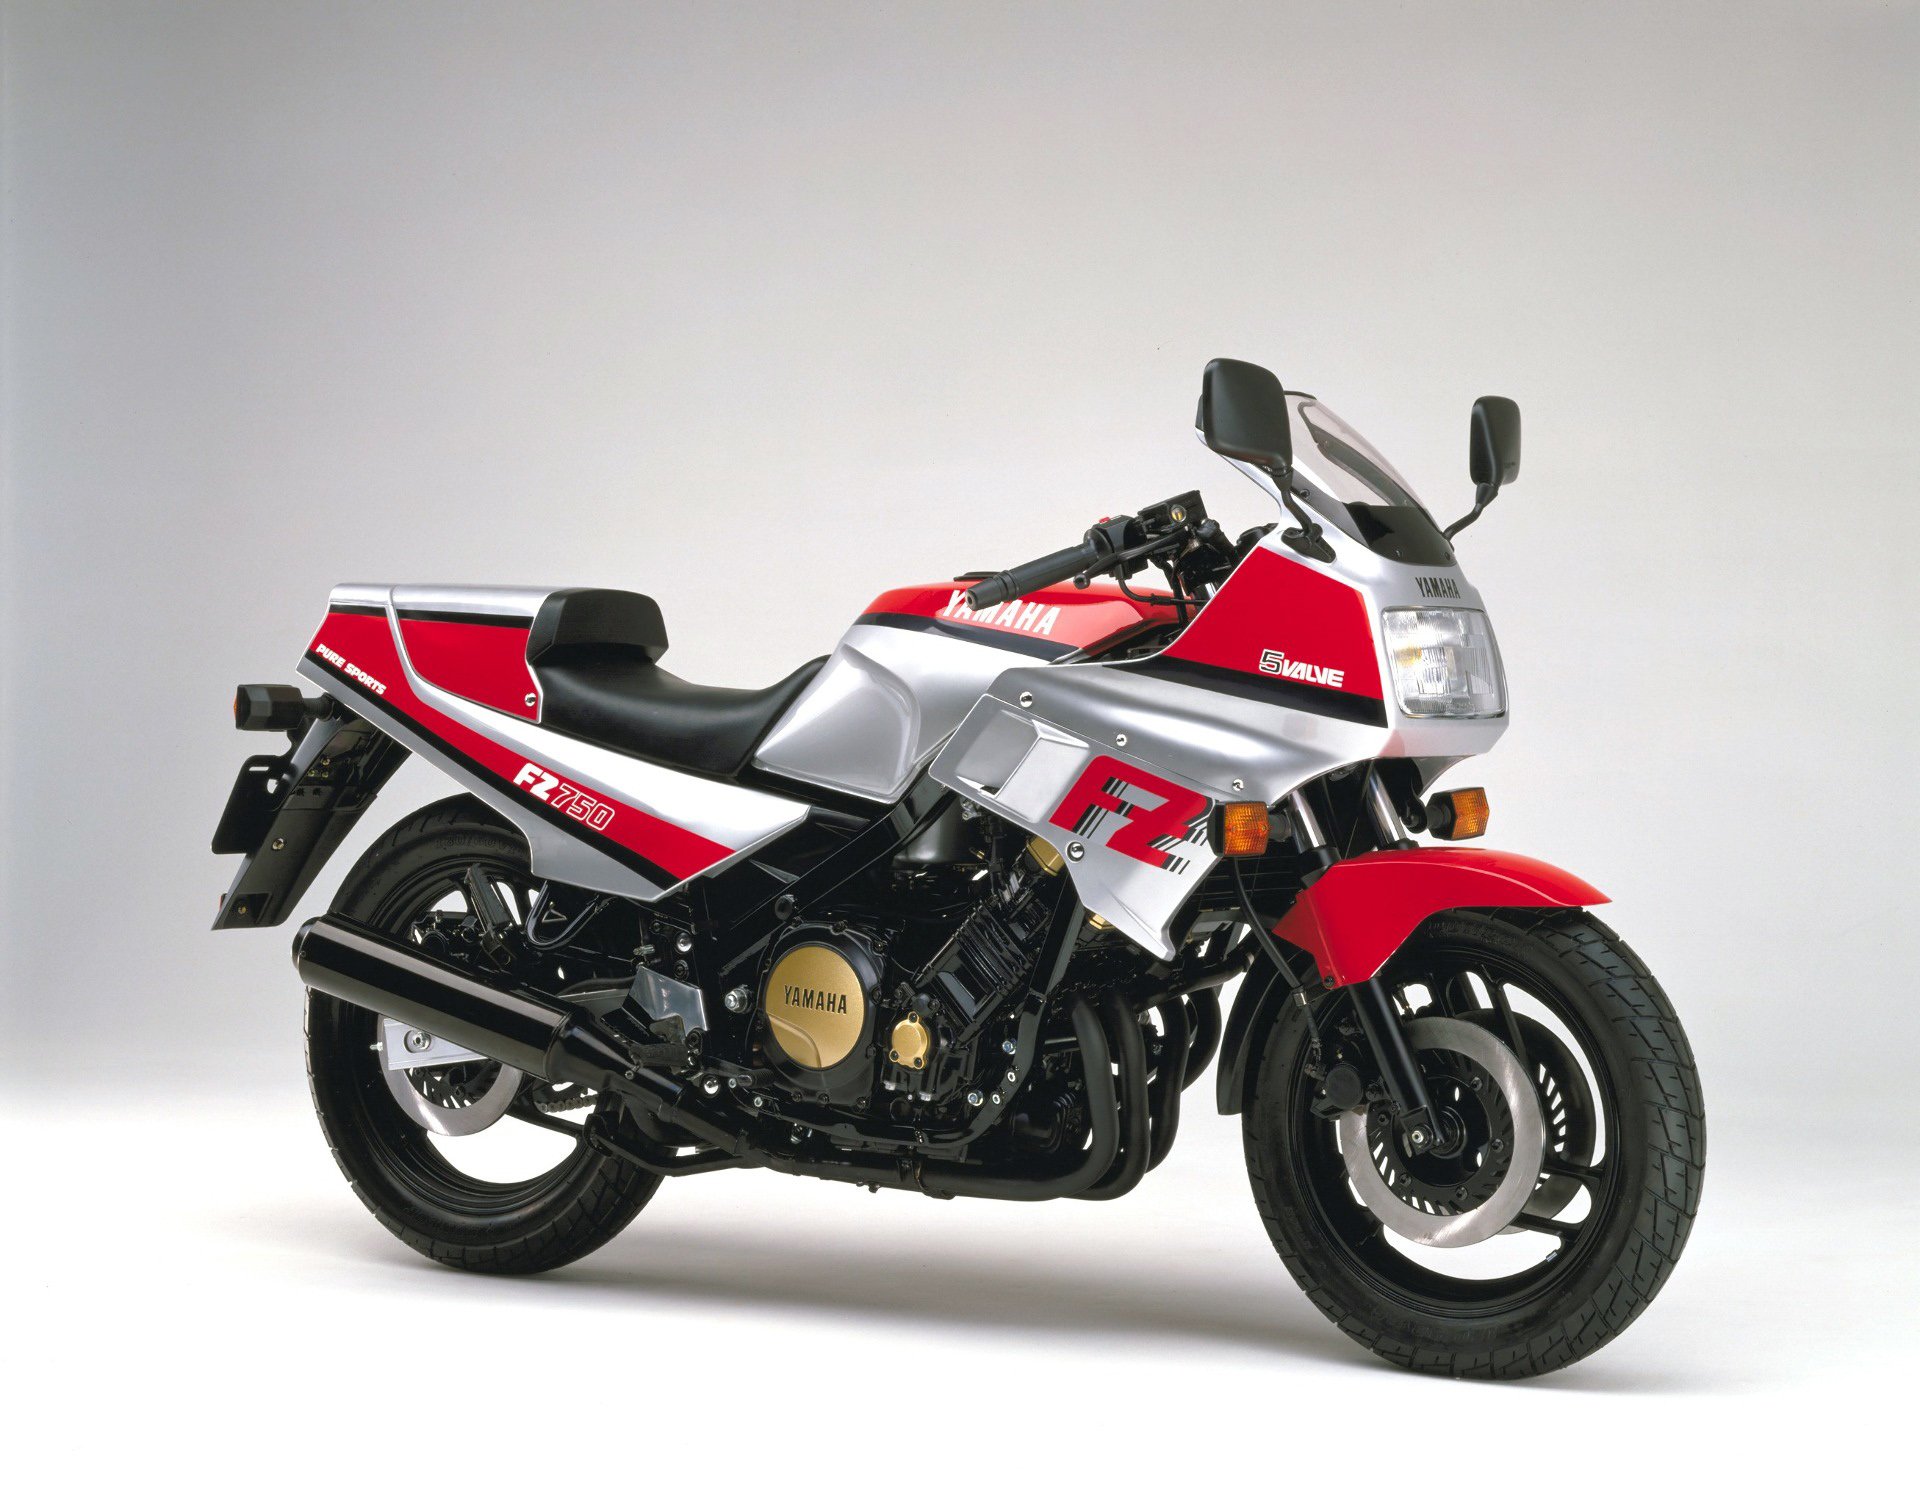 Yamaha fz 750 genesis: review, history, specs - bikeswiki.com, japanese motorcycle encyclopedia